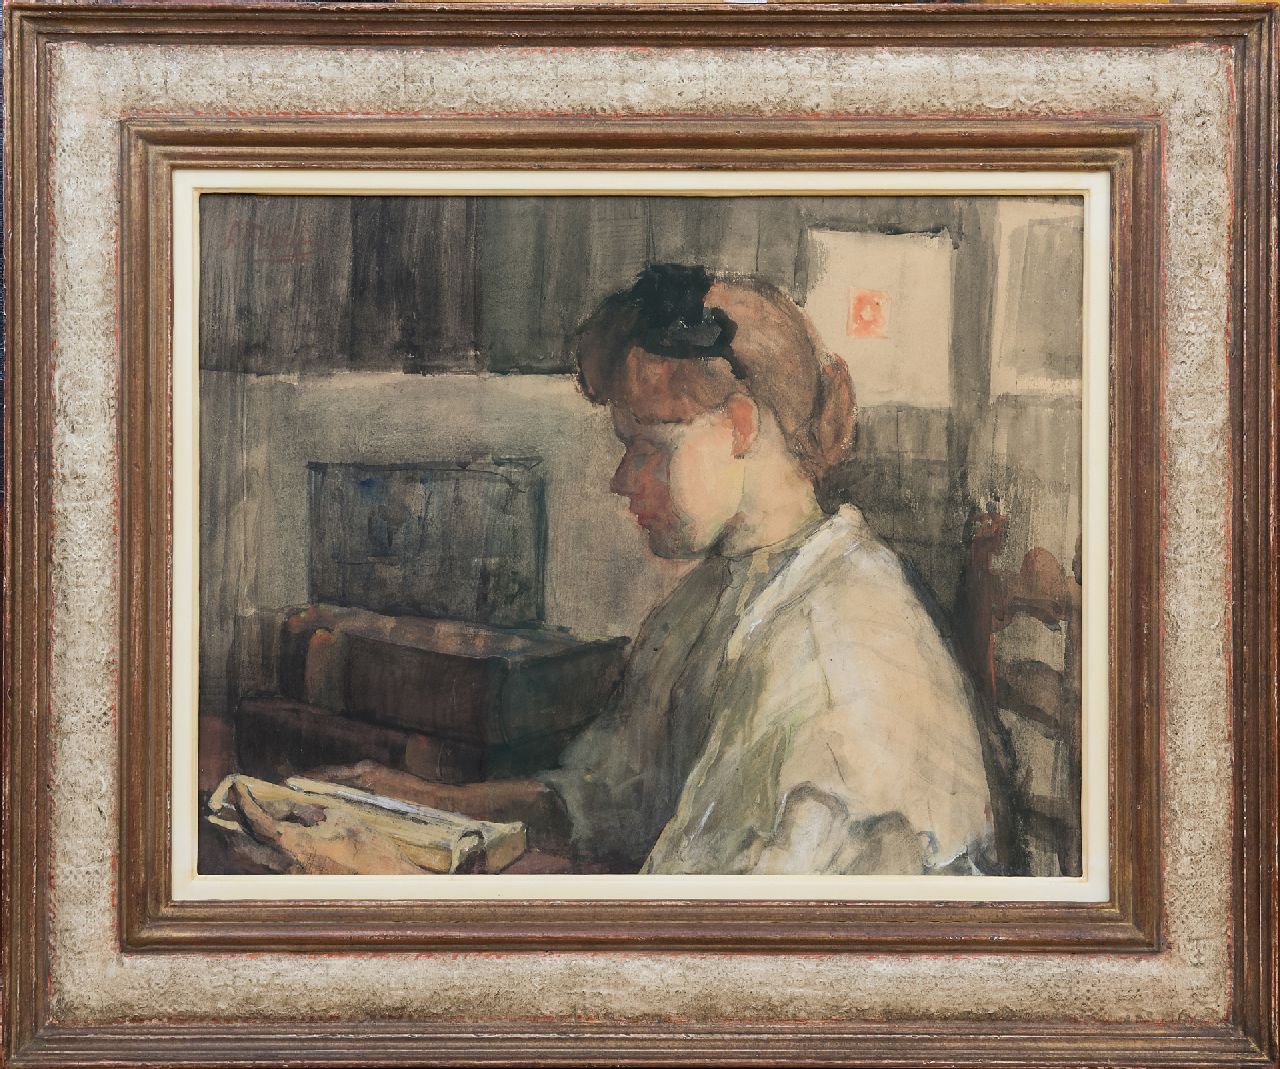 Fritzlin M.C.L.  | Maria Charlotta 'Louise' Fritzlin, Lezend meisje, aquarel op papier op board 32,5 x 42,0 cm, gesigneerd linksboven en te dateren 1908